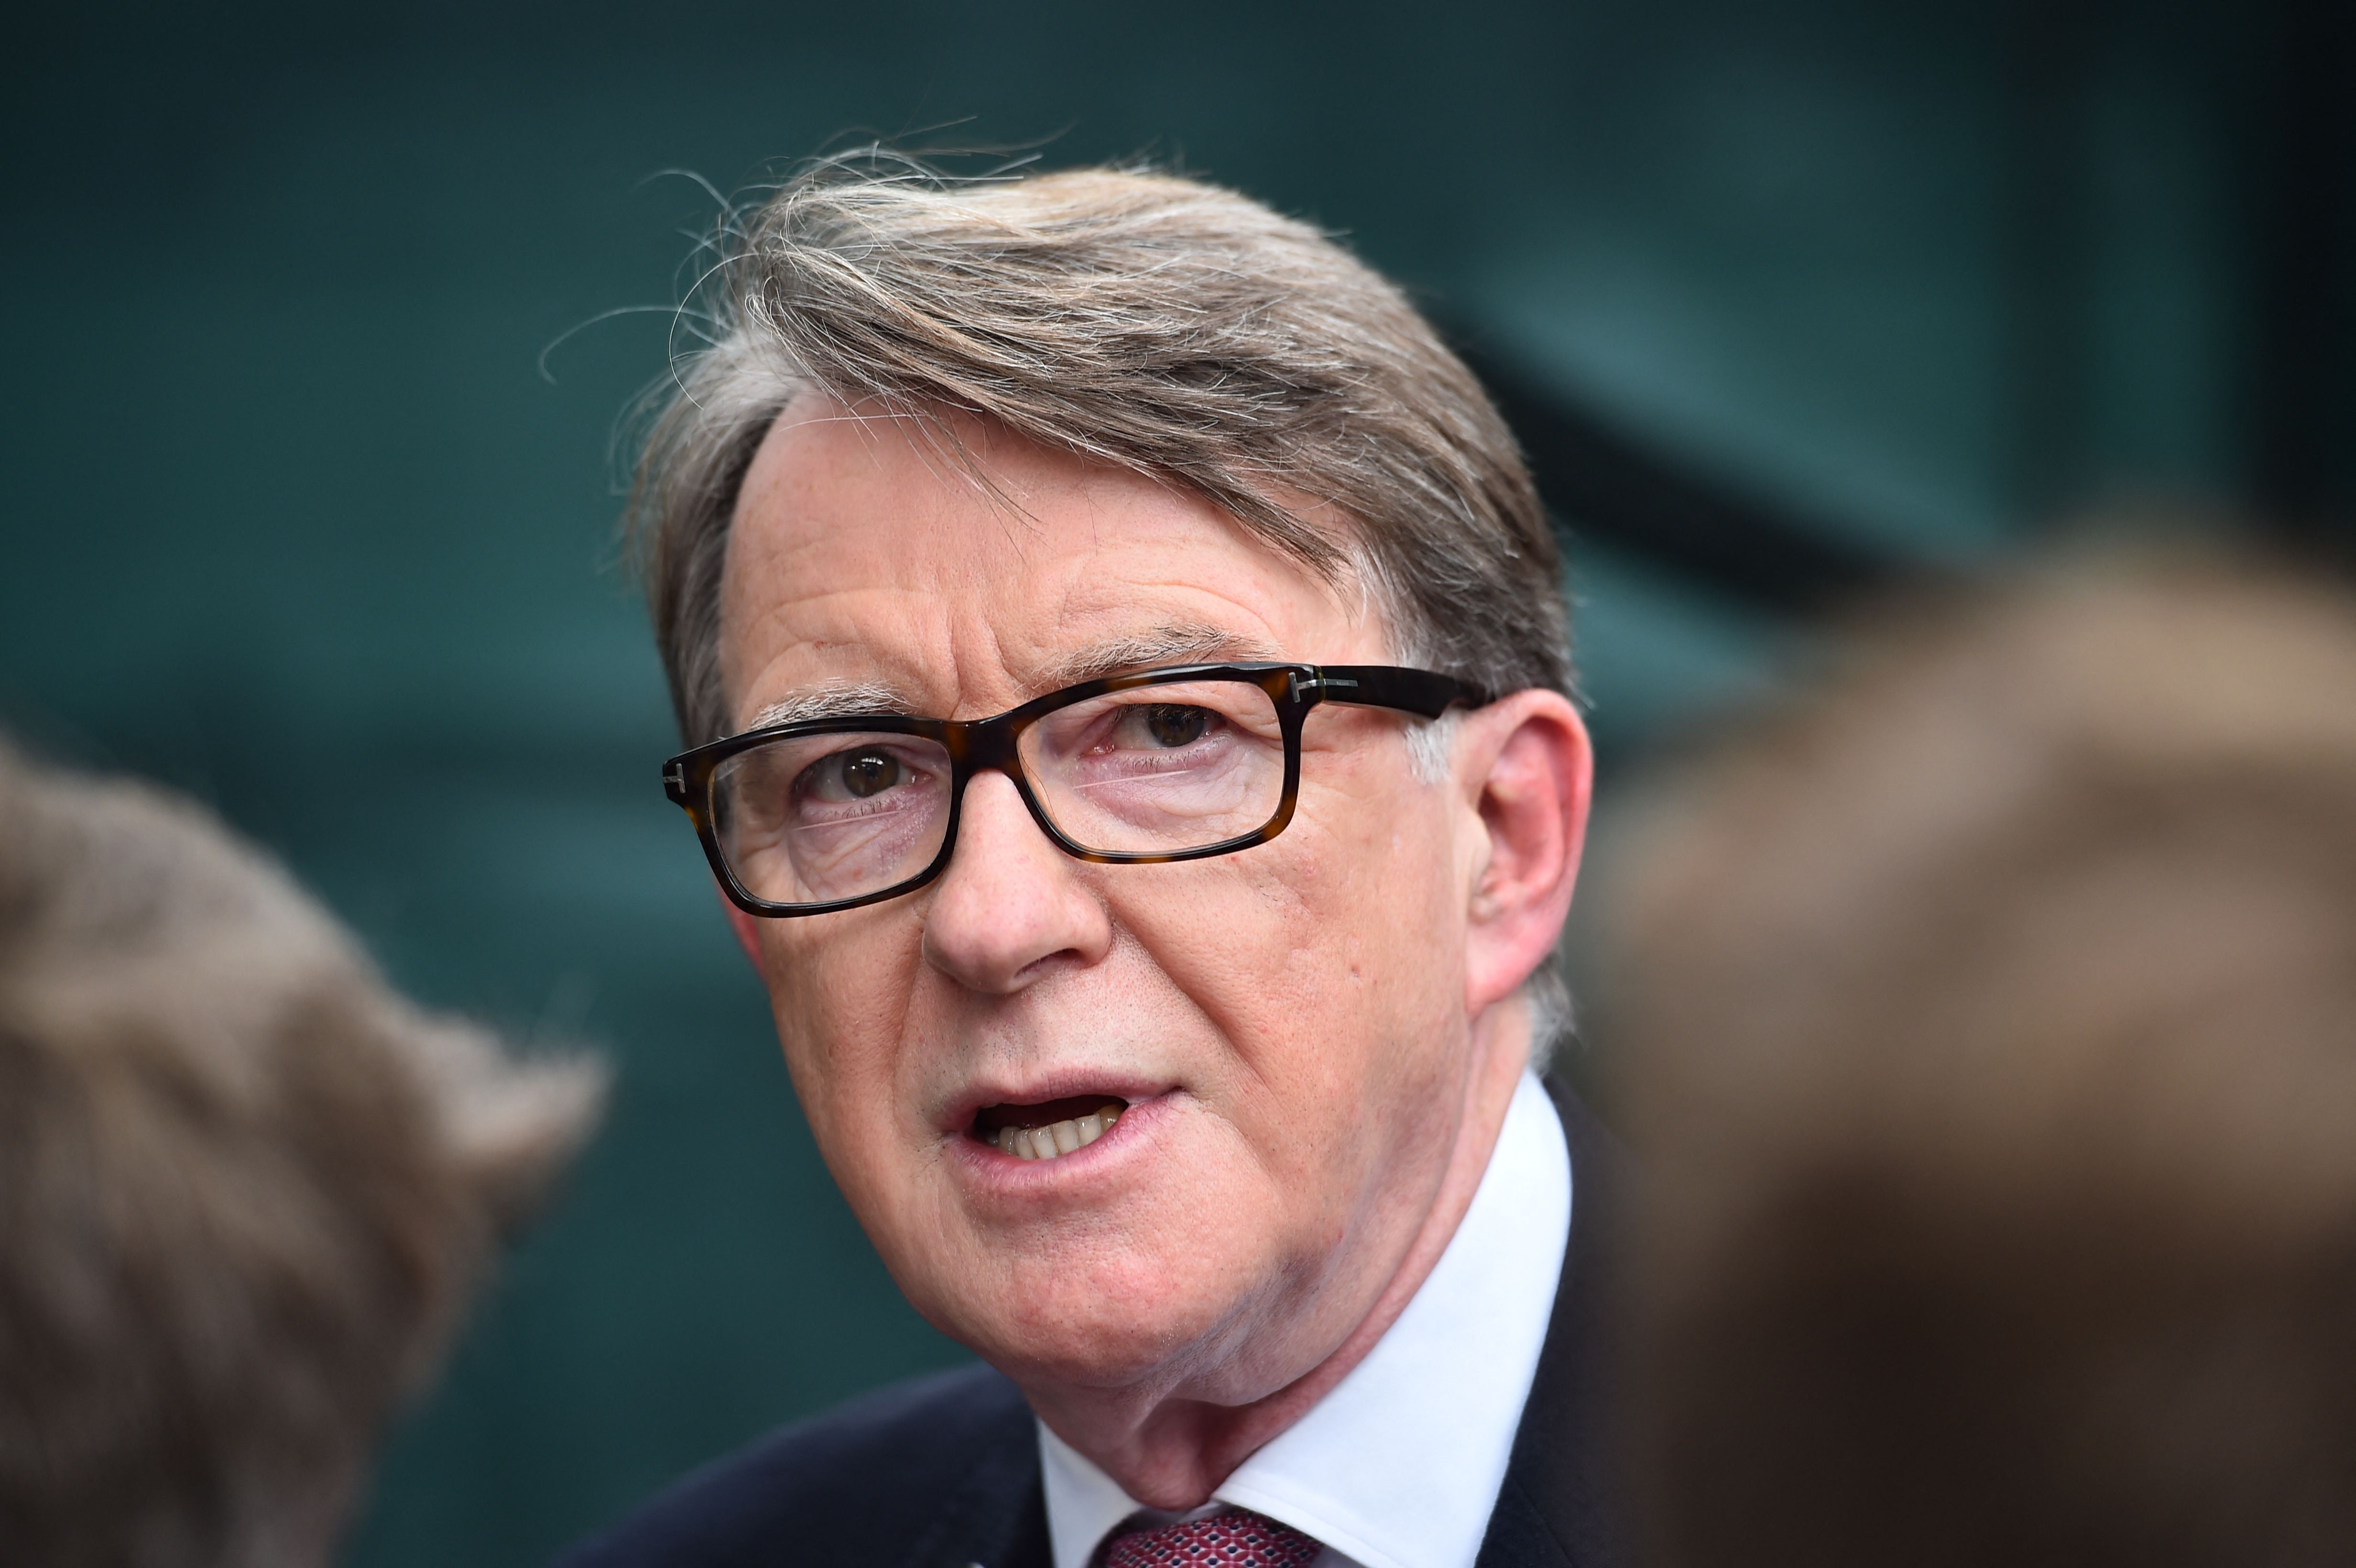 Peter Mandelson ‘very much regrets’ Epstein ties